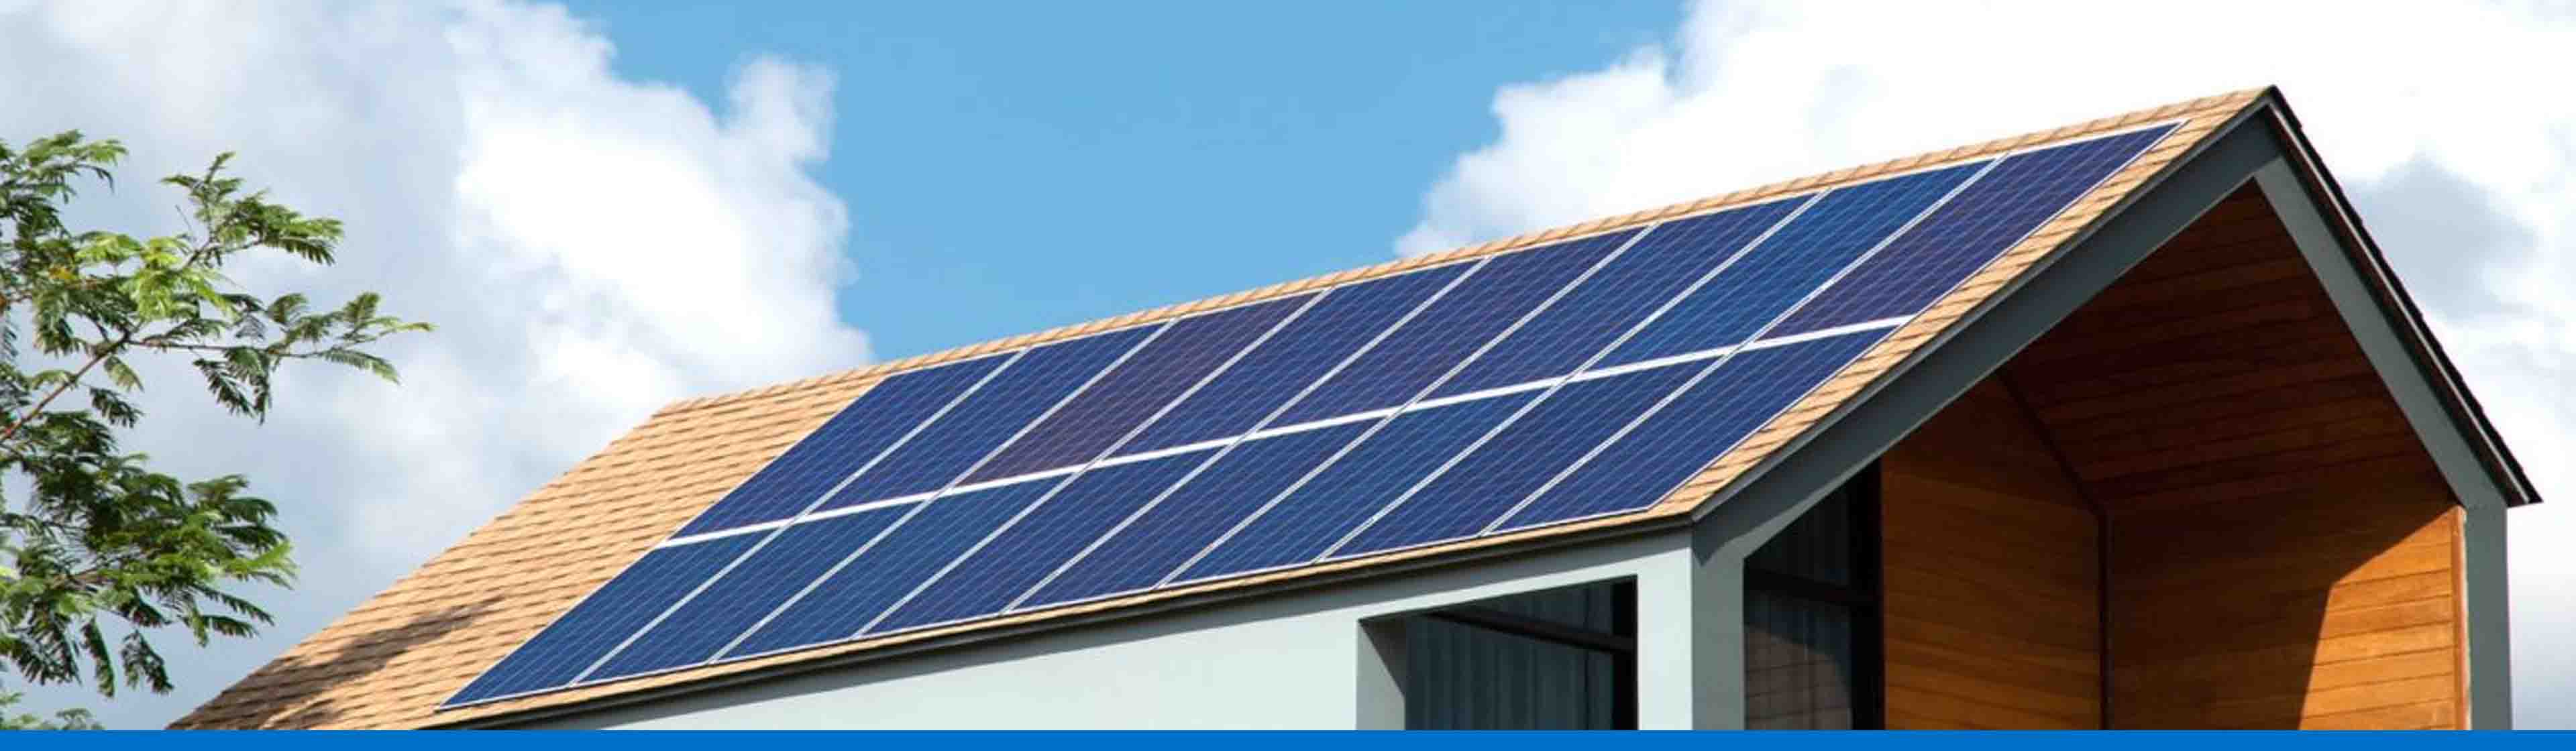 ¿Vas a invertir en energía solar?